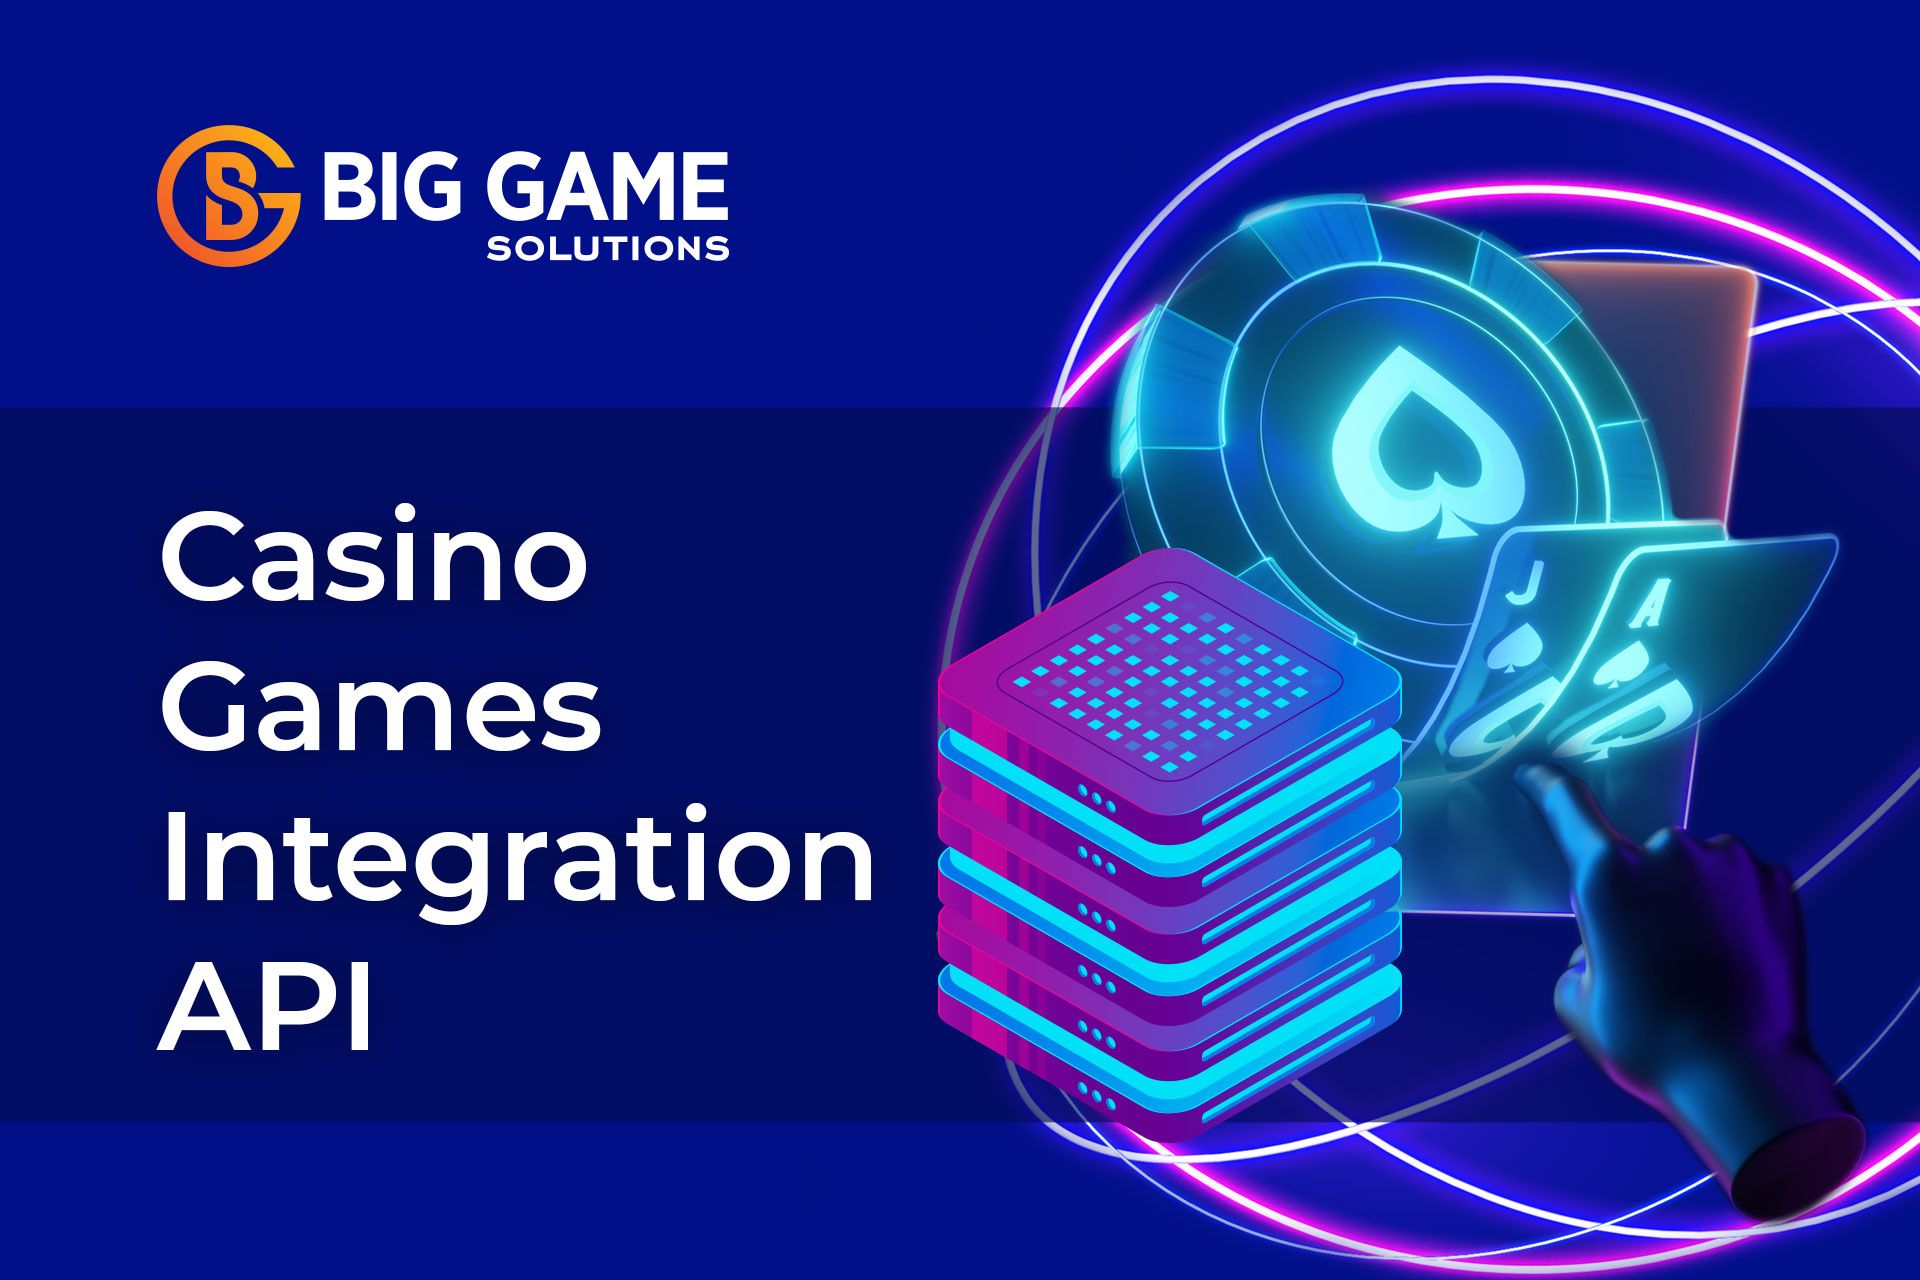 Onlyplay Software API Integration, Casino Games Provider